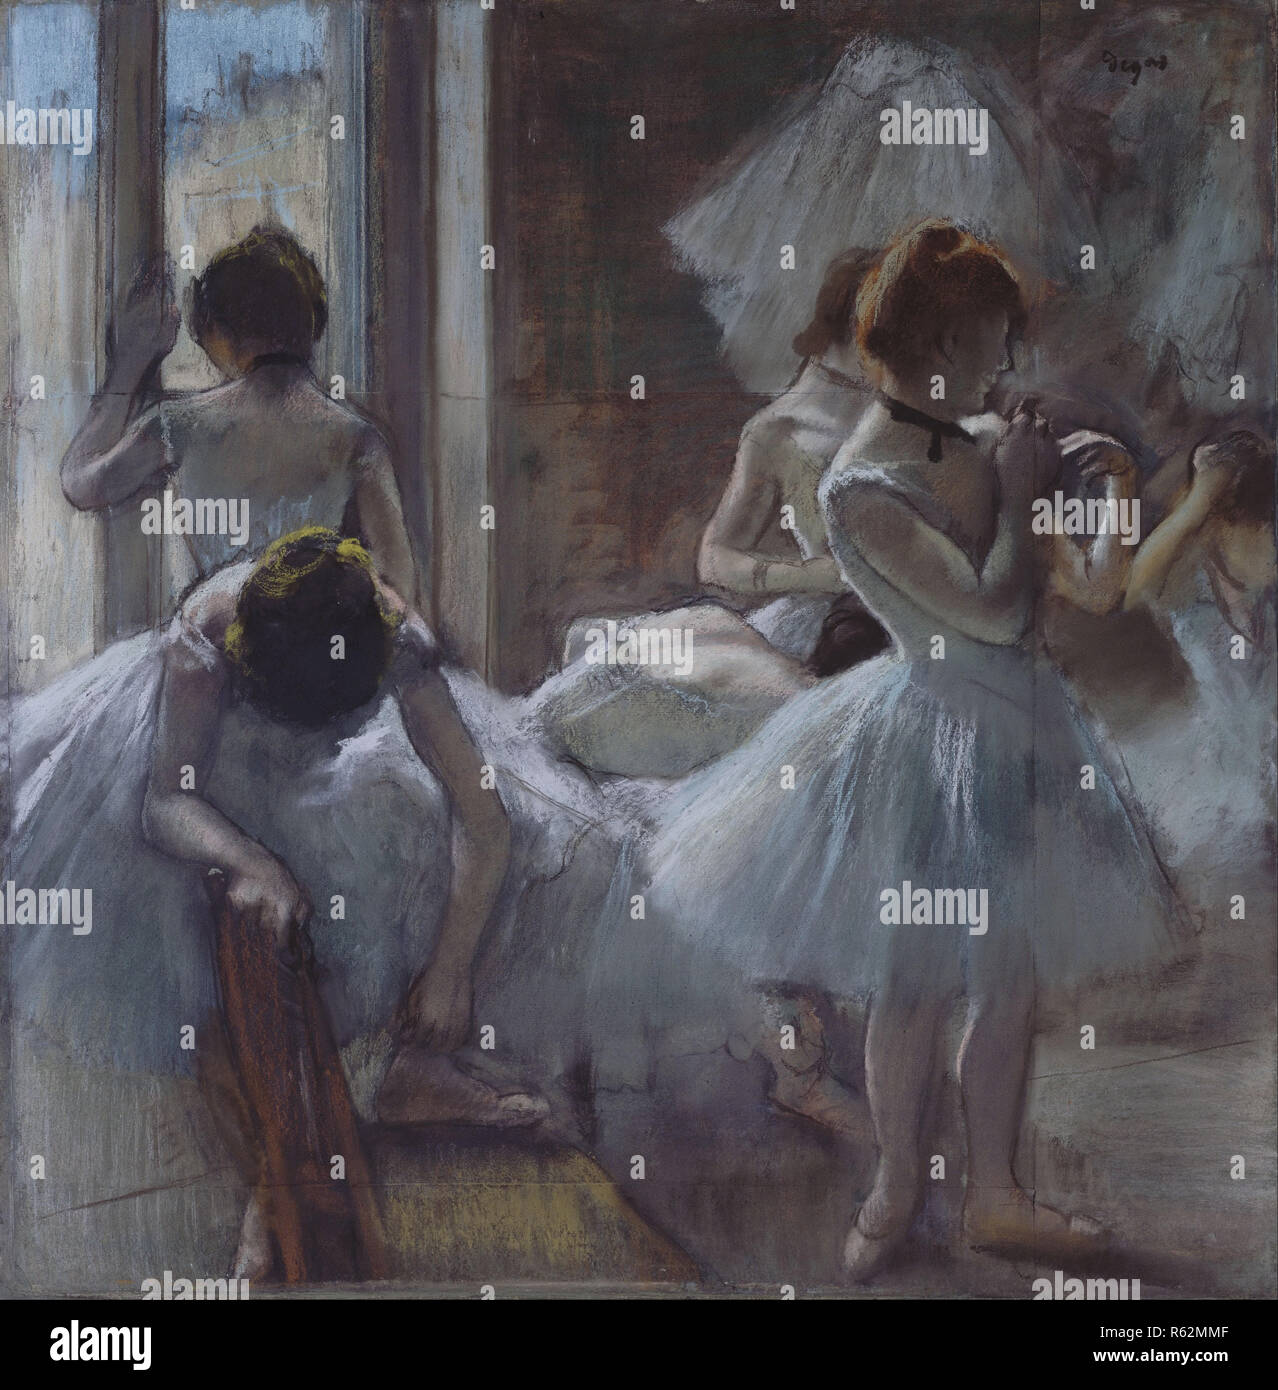 Danseuses Dancers. Date/Period: 1884 - 1885. Pastel. Height: 750 mm (29.52 in); Width: 730 mm (28.74 in). Author: EDGAR DEGAS. DEGAS, EDGAR. Stock Photo